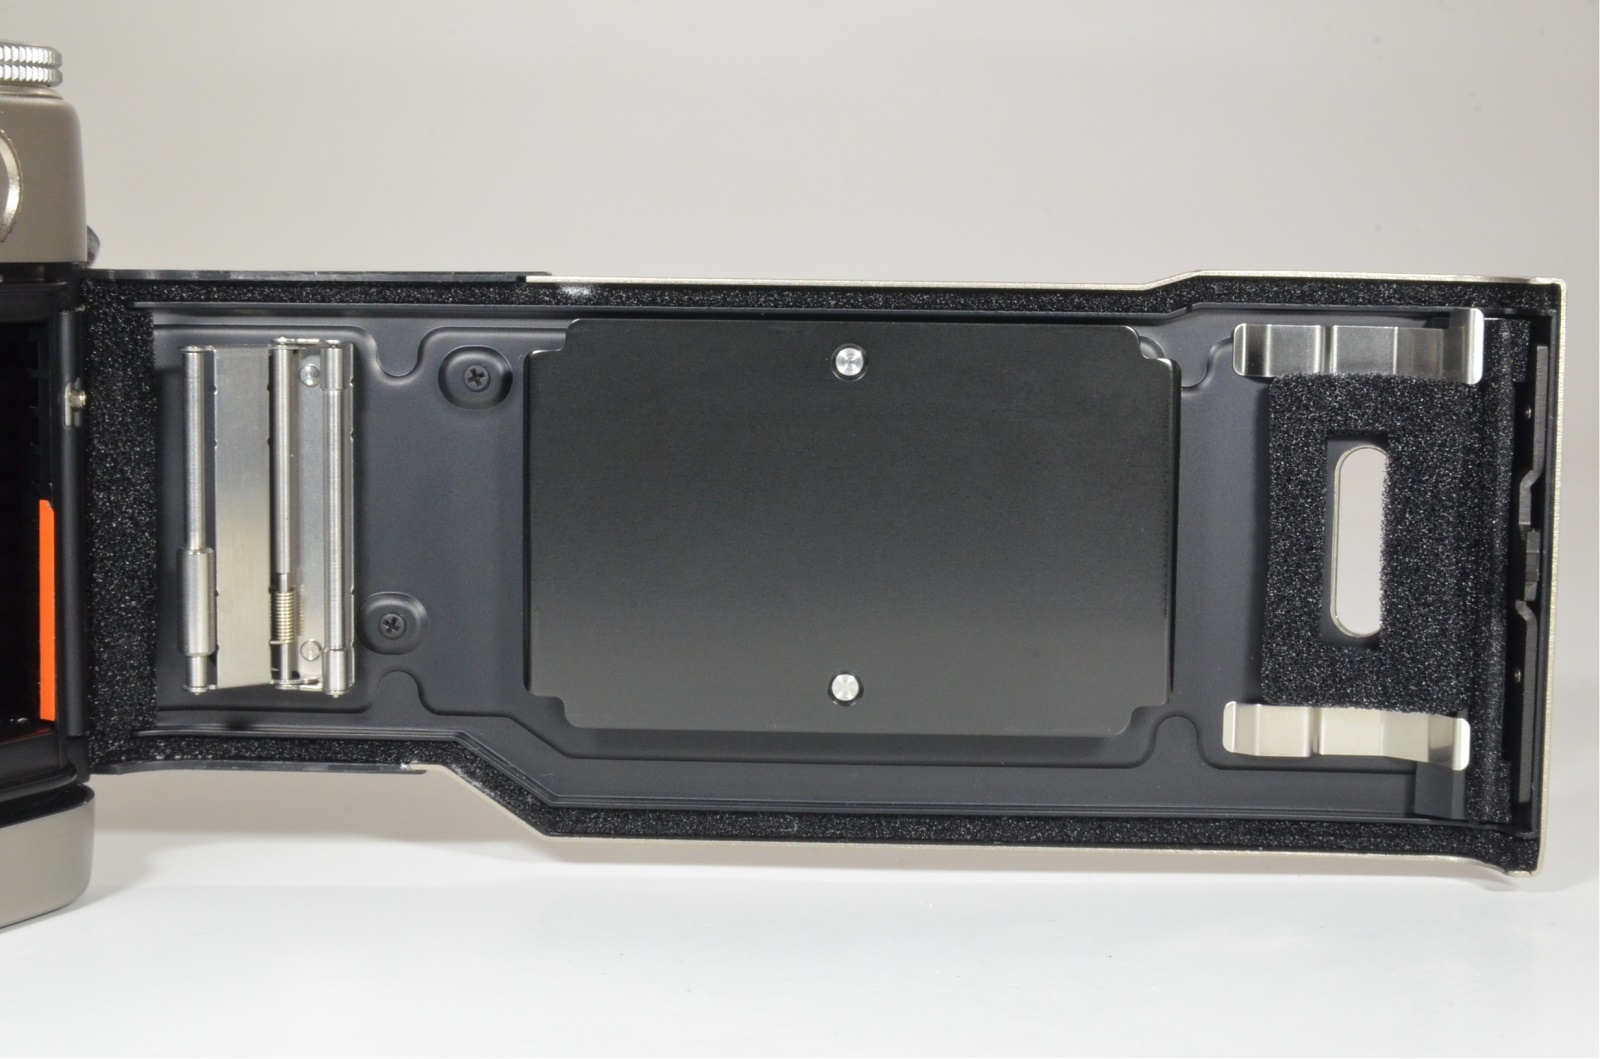 contax g2 camera with planar 45mm, sonnar 90mm, biogon 21mm, viewfinder